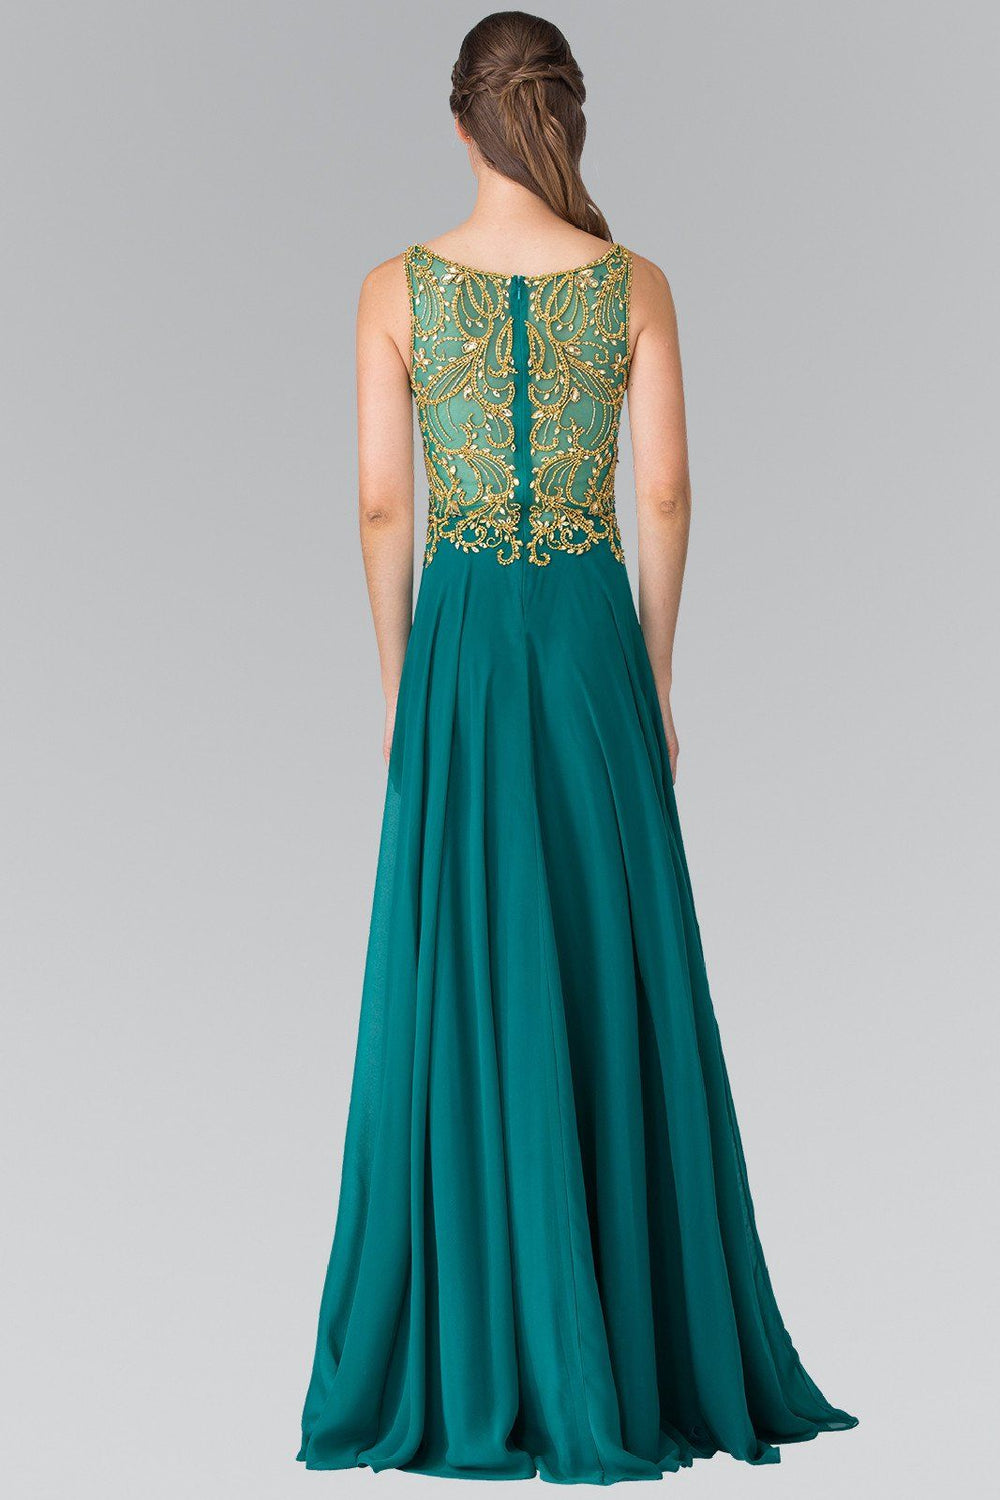 Sleeveless Beaded Dress with Illusion Back by Elizabeth K GL2274-Long Formal Dresses-ABC Fashion